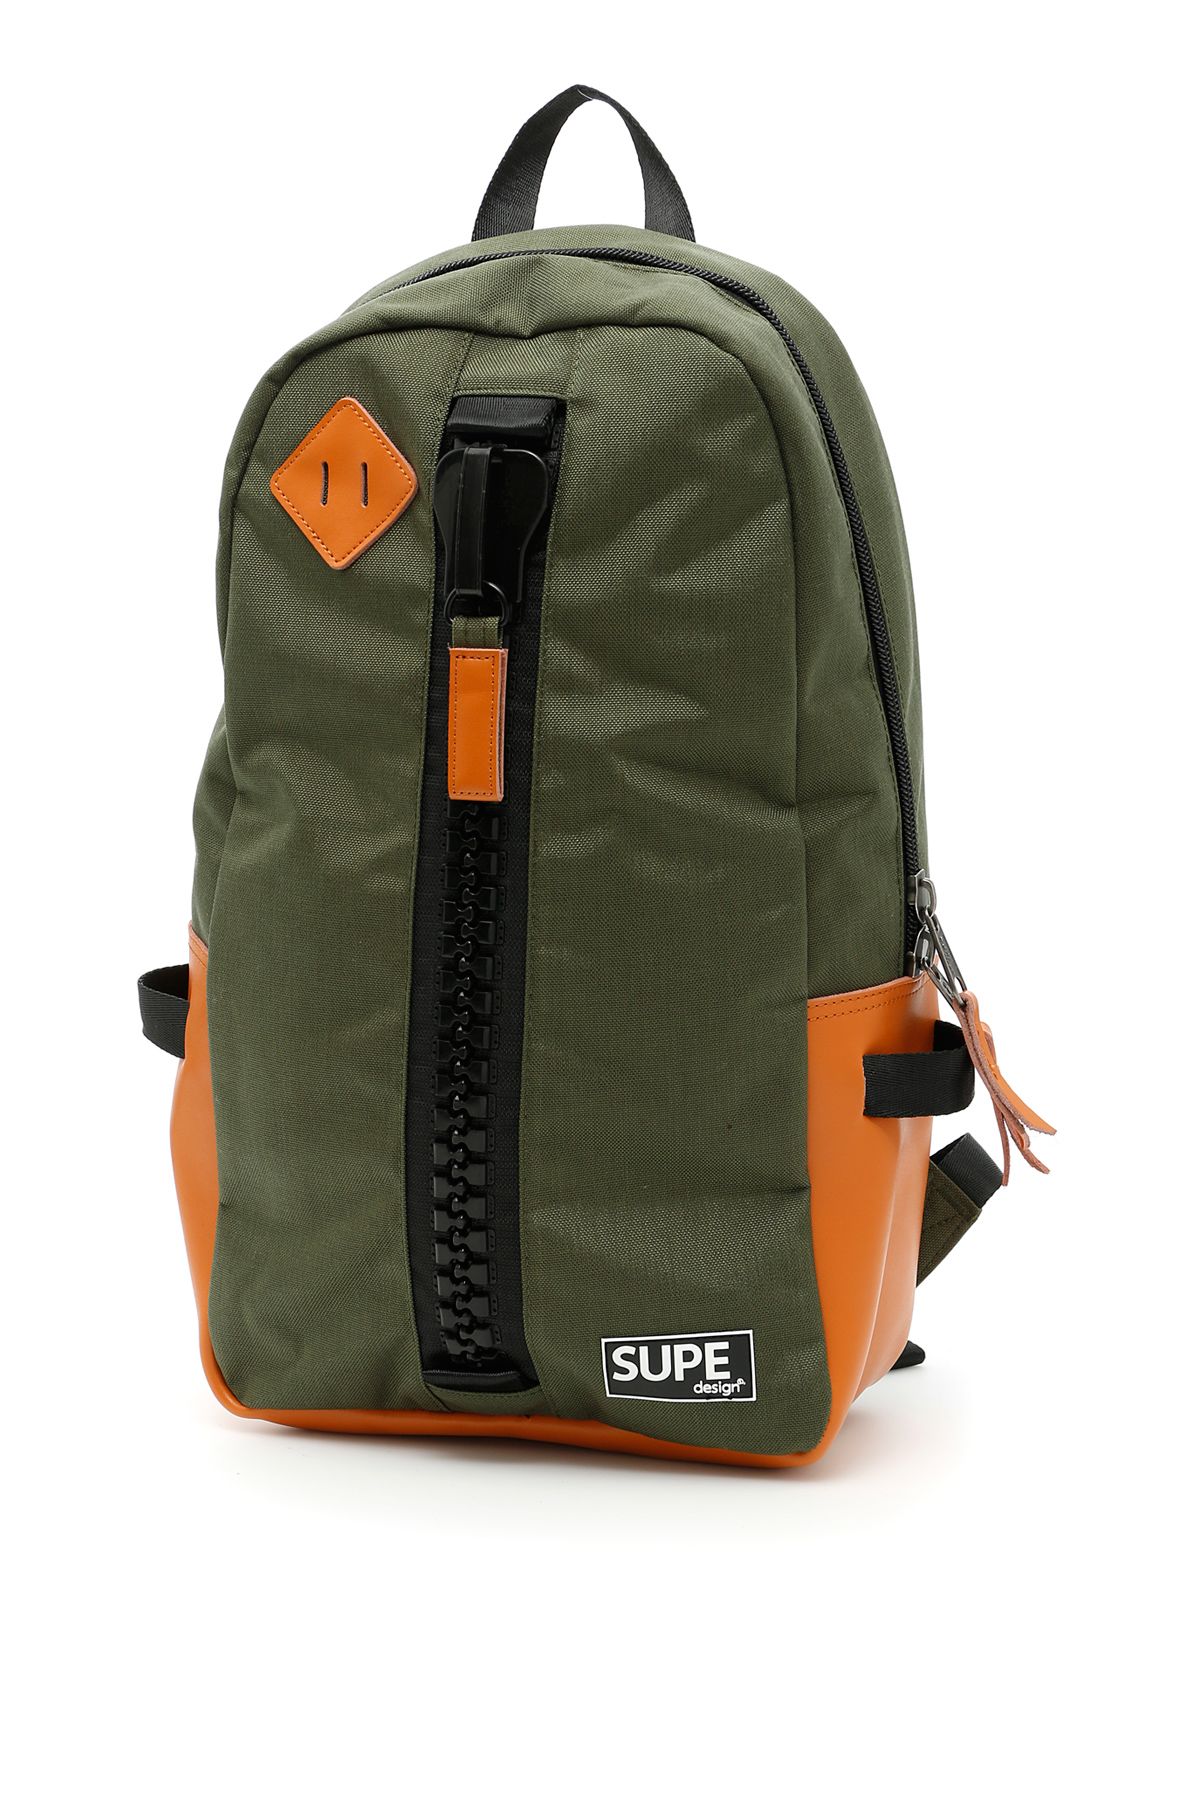 Supe Design - Day Bag Infinity Backpack - OLIVE|Arancio, Men's ...